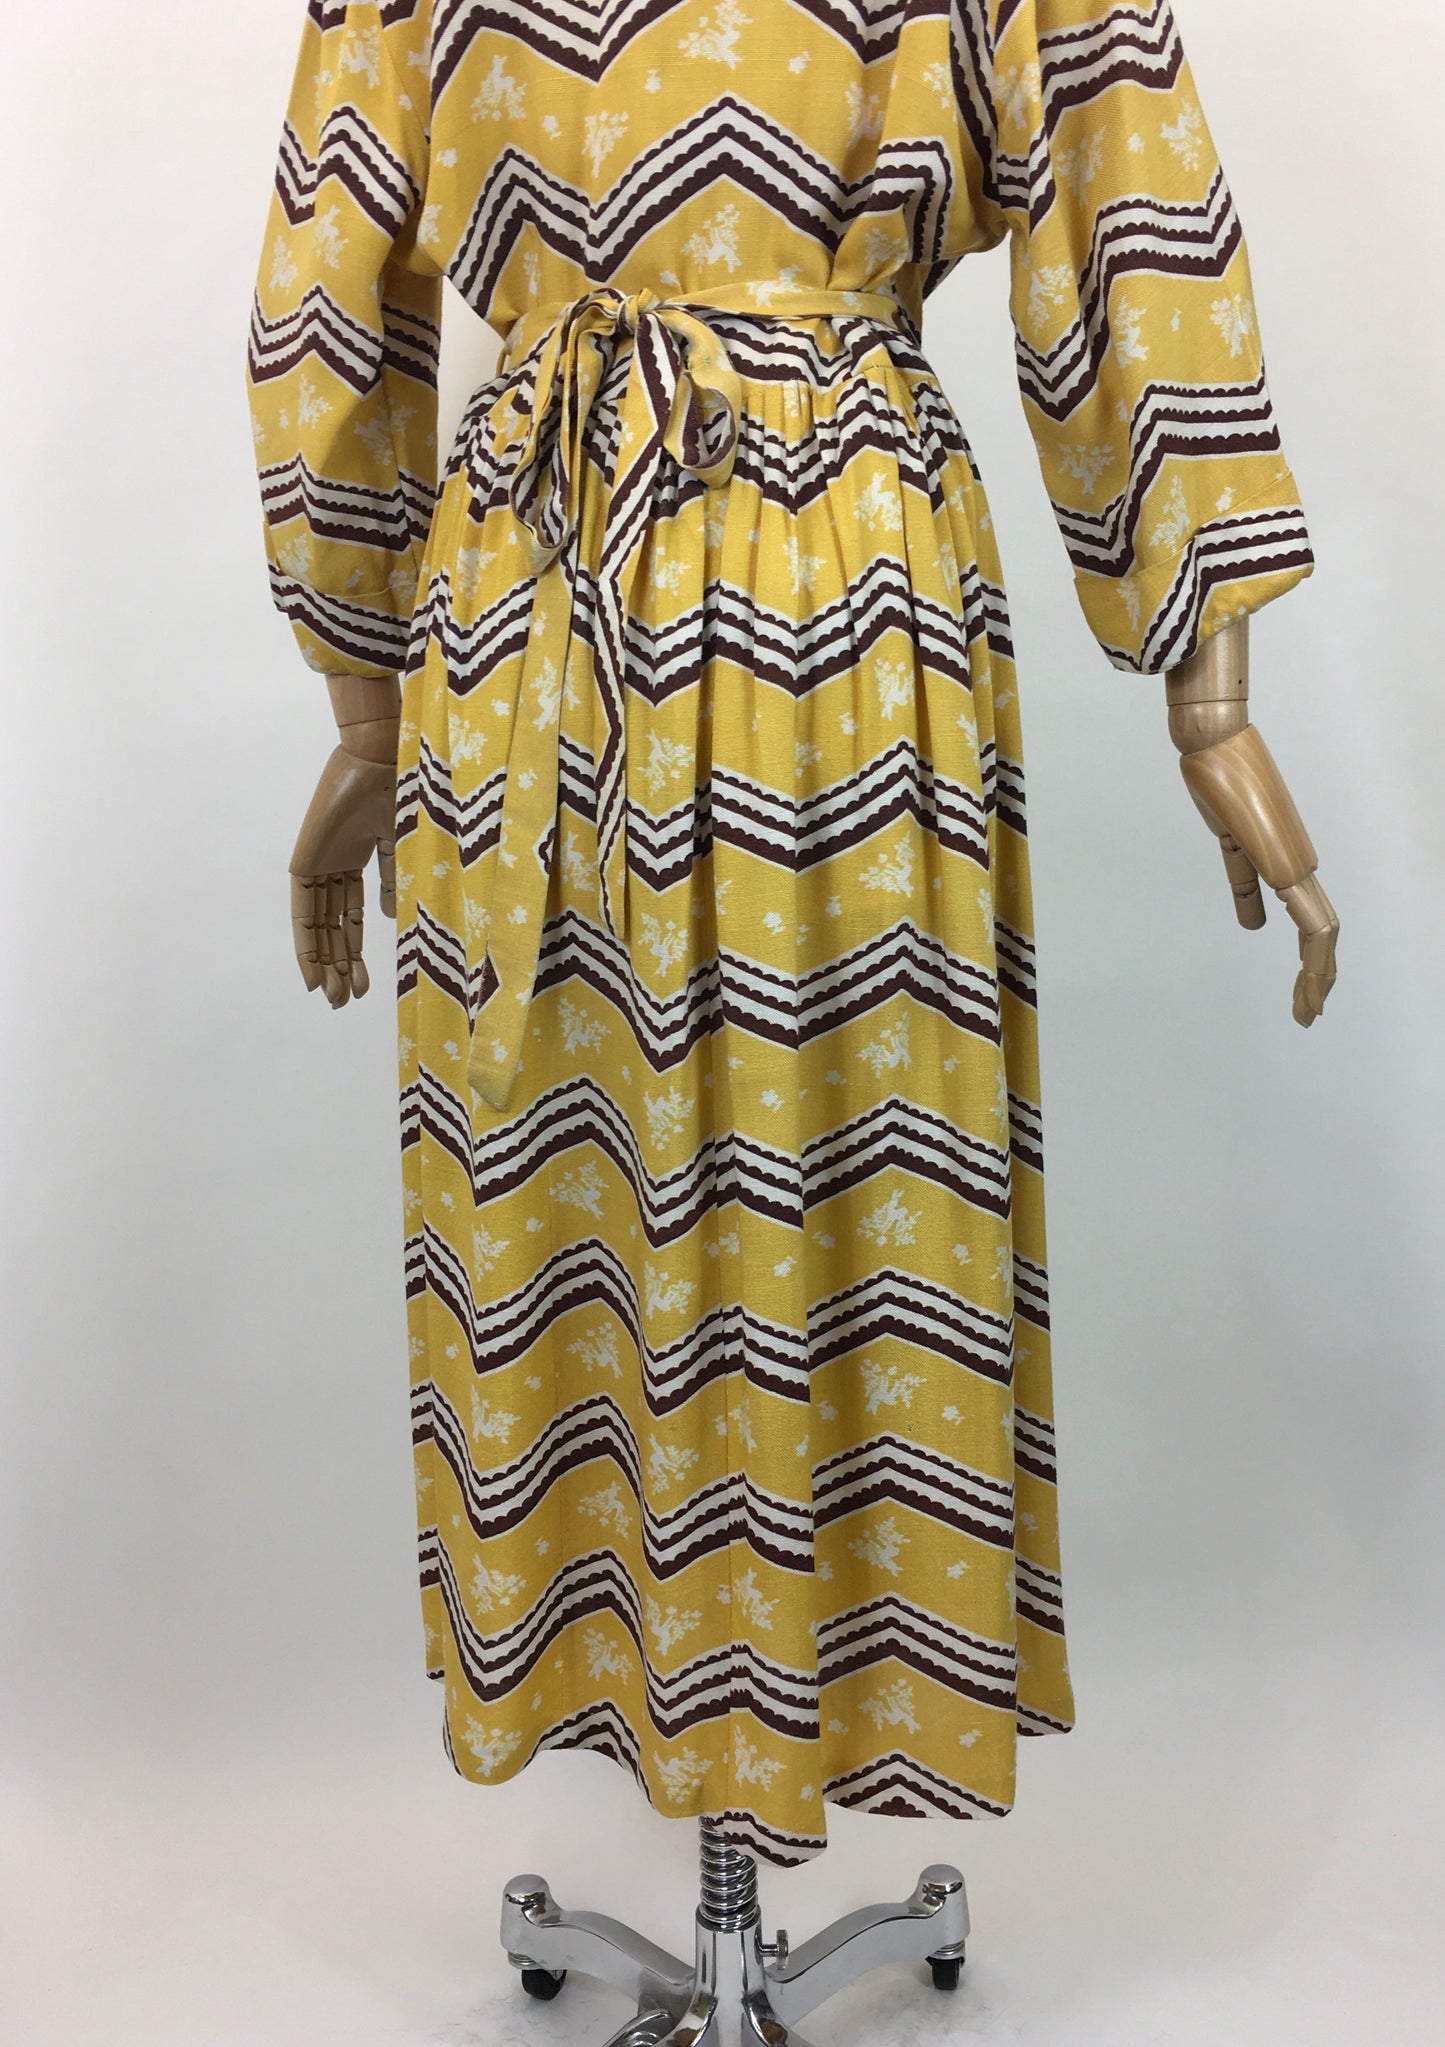 Original 1940's Sensational CC41 Moygashol Linen Novelty Print Dress - In Chocolate Brown, Cream and Mustard